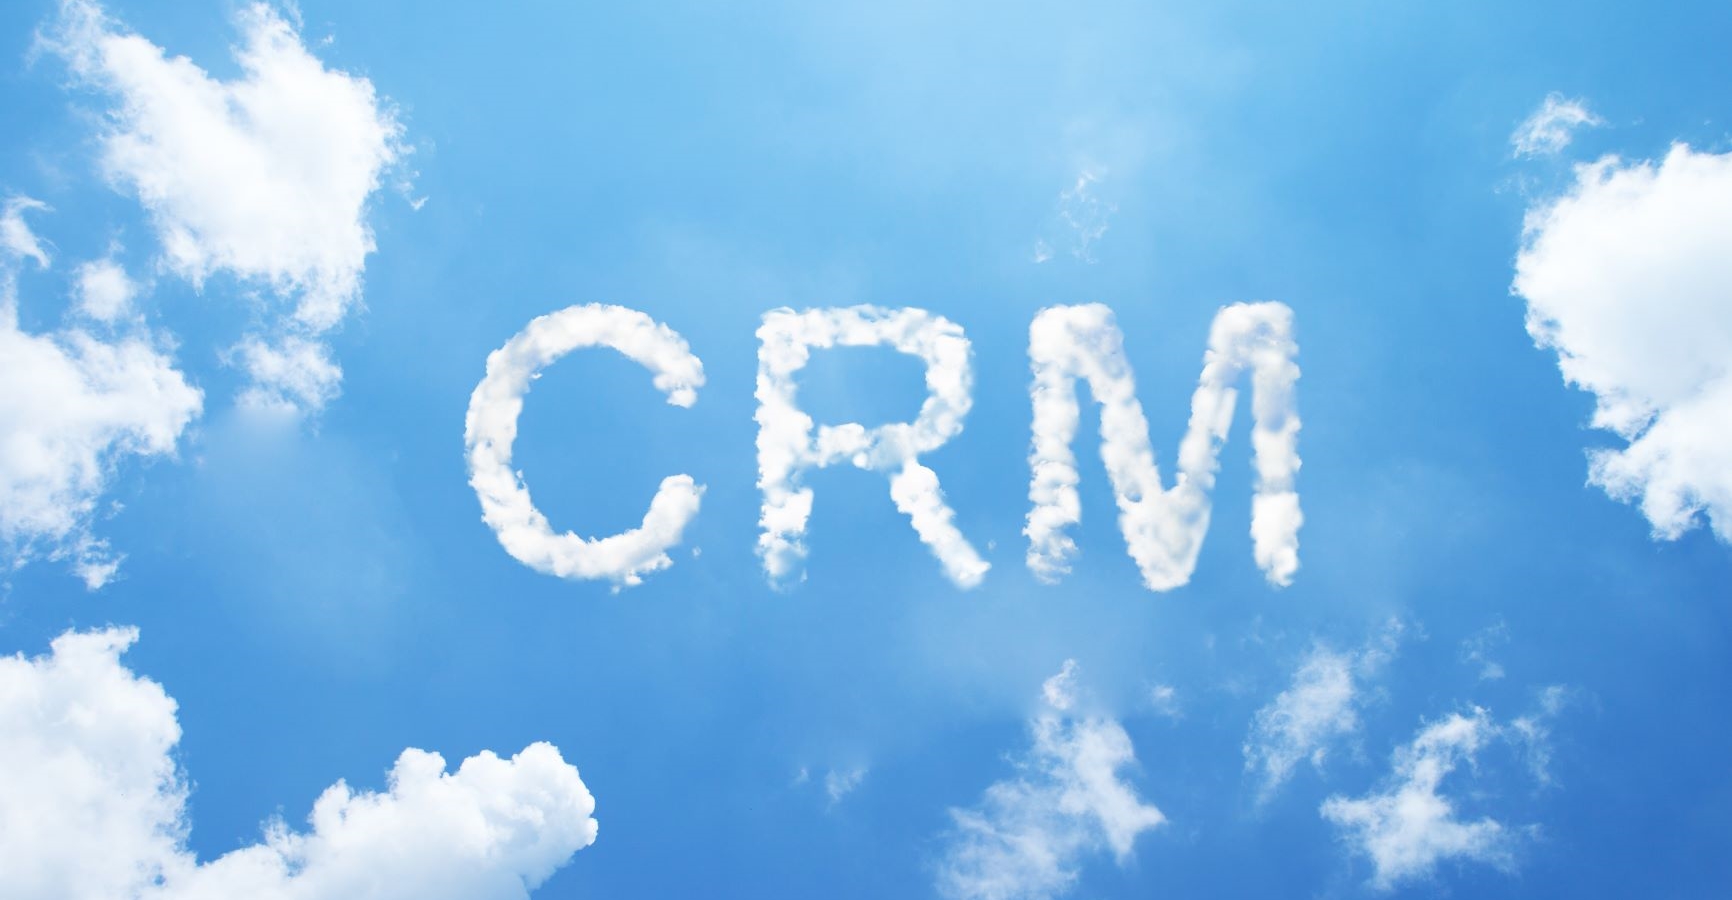 Cloud CRM